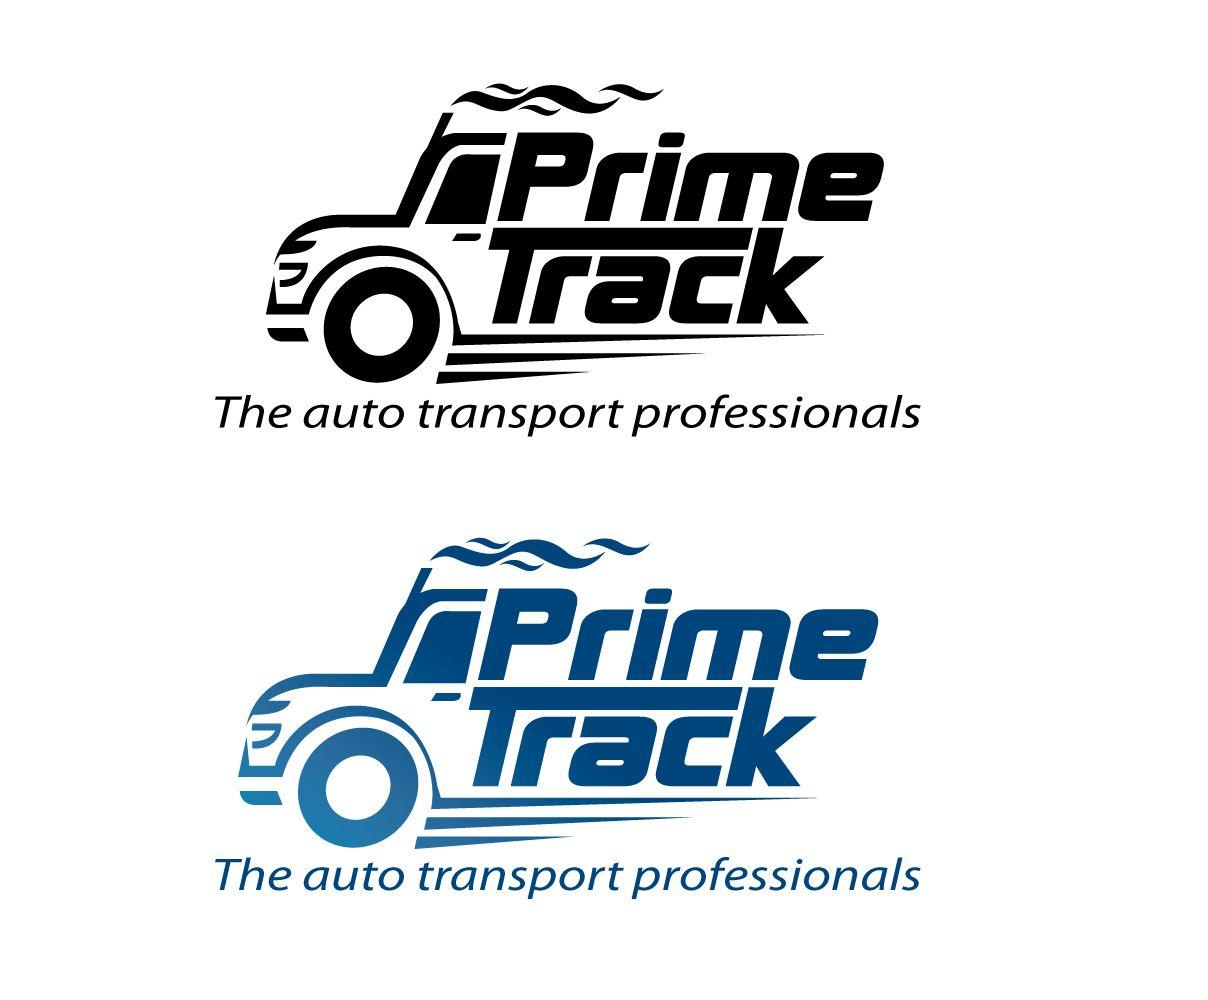 Car Transport Logo - Business Logo Design for Prime Track. The auto transport